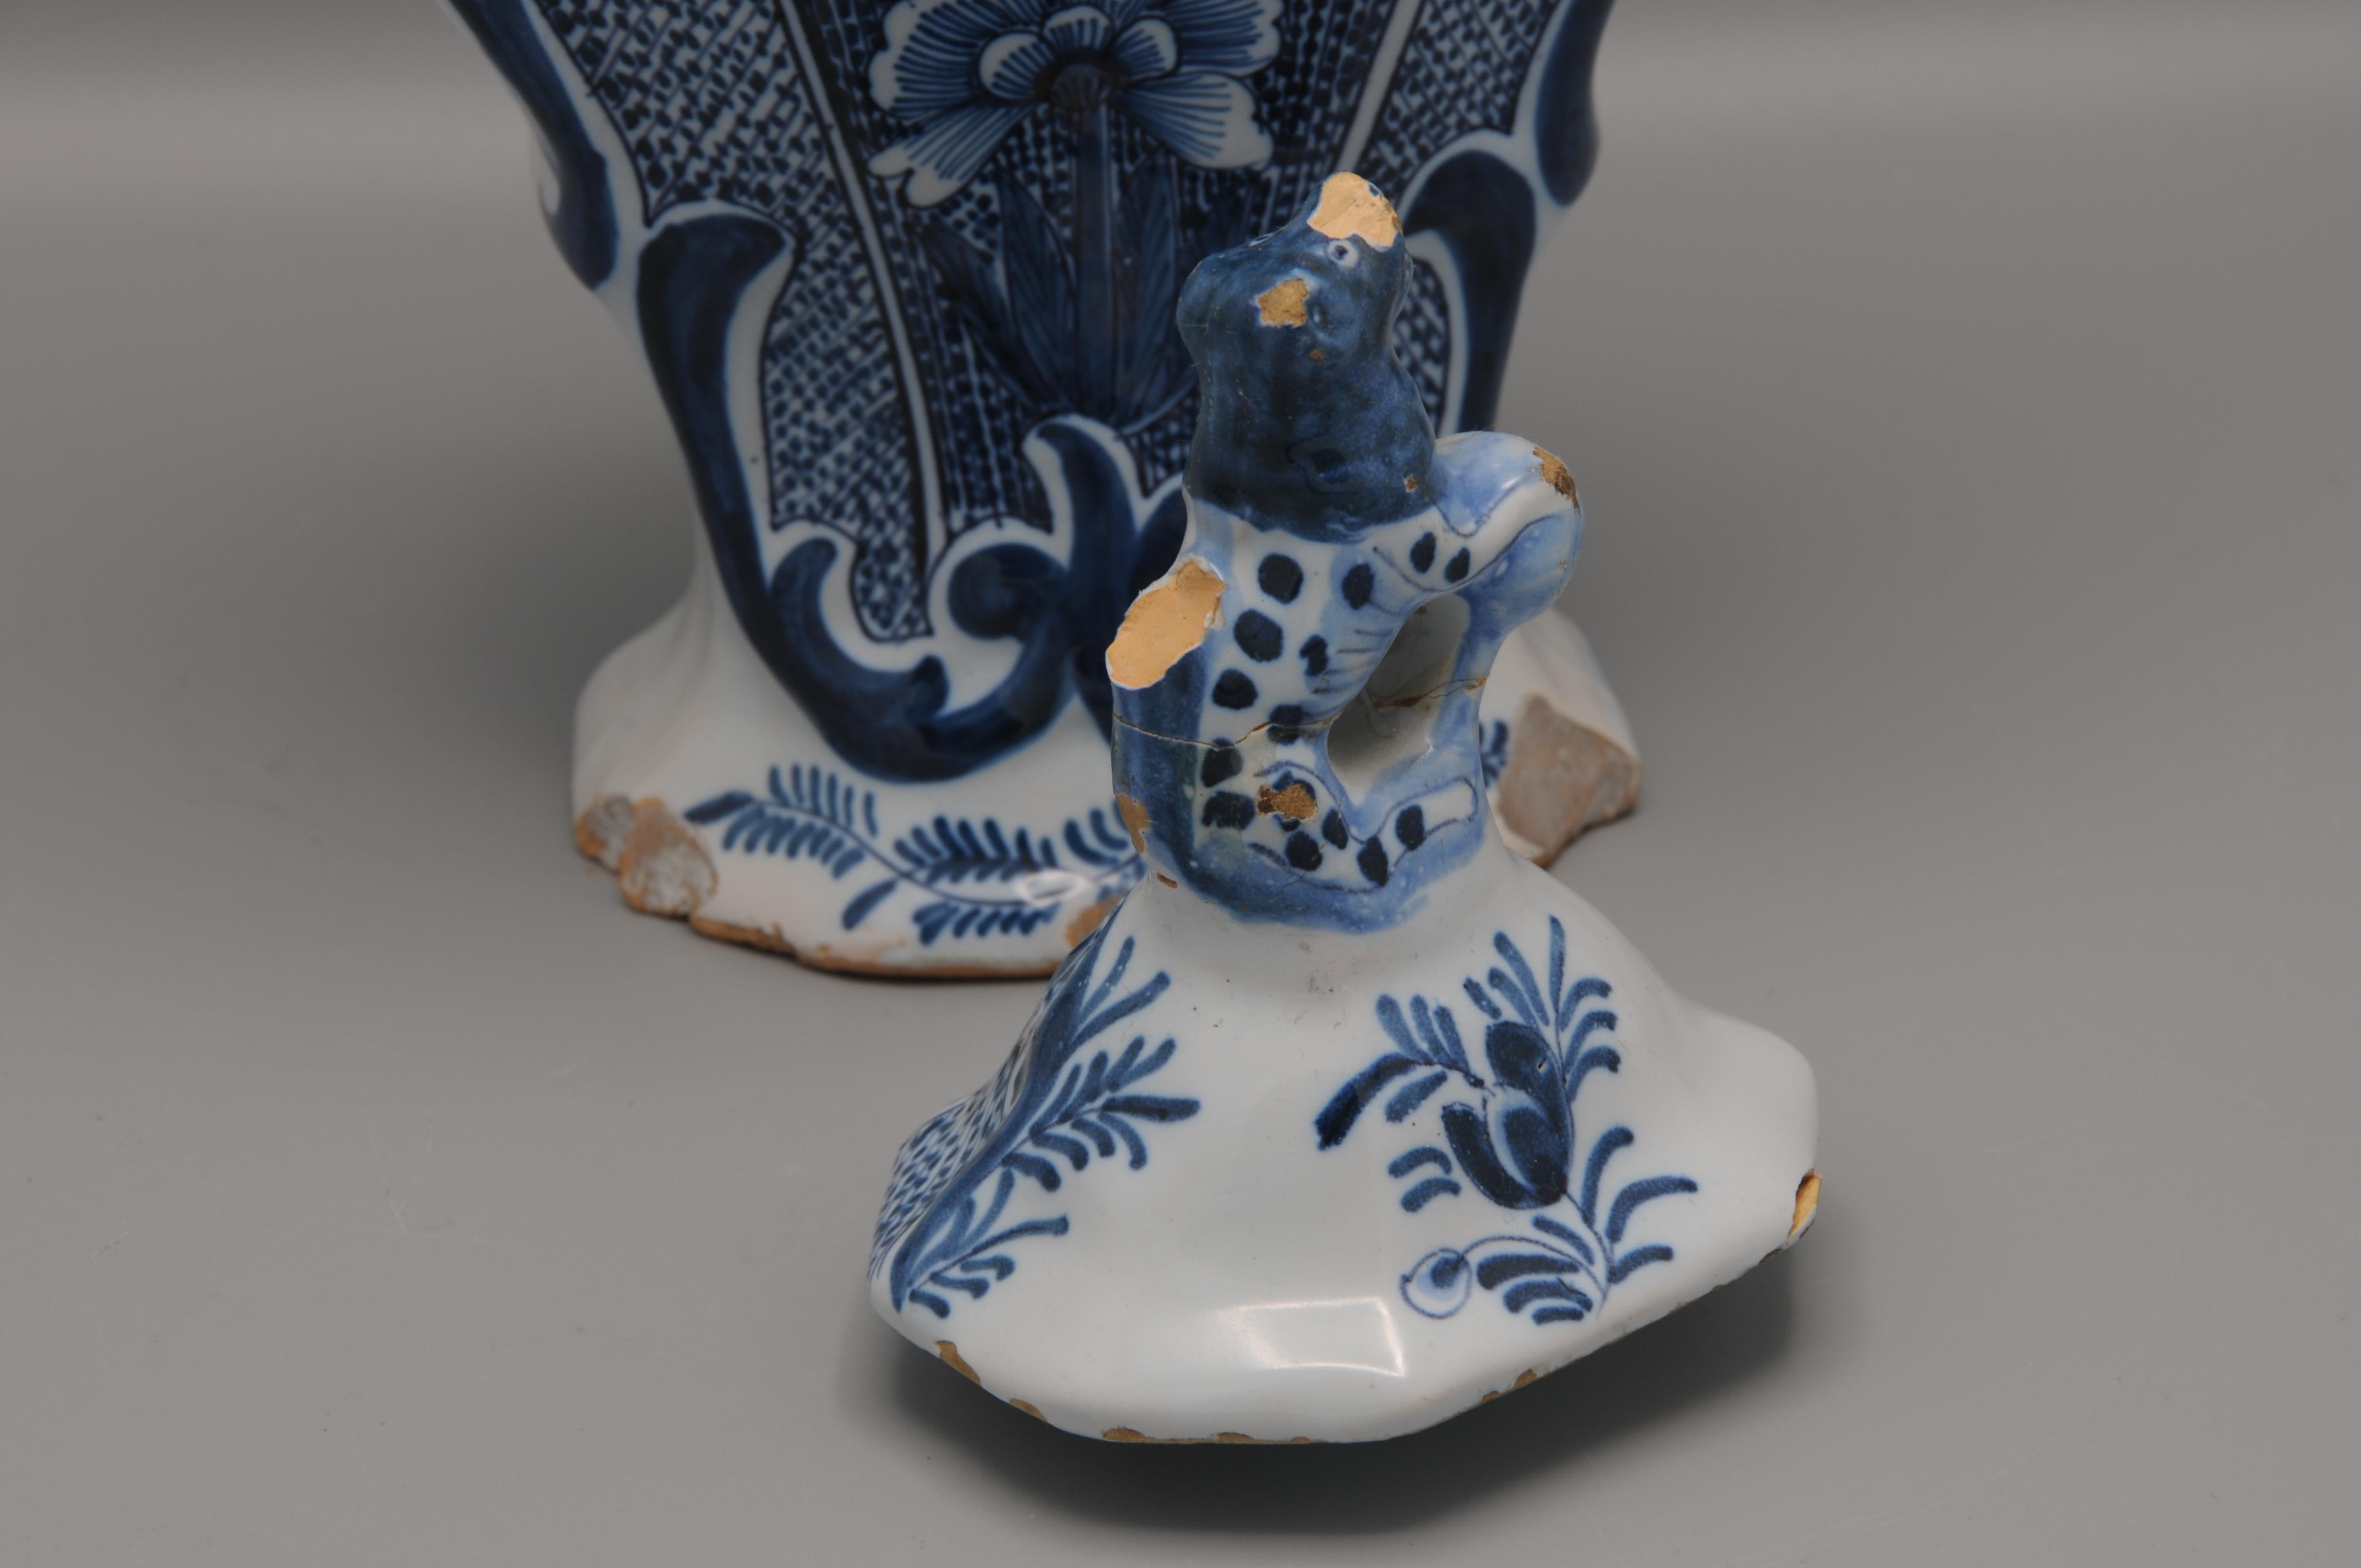 18th Century Delft vase by 